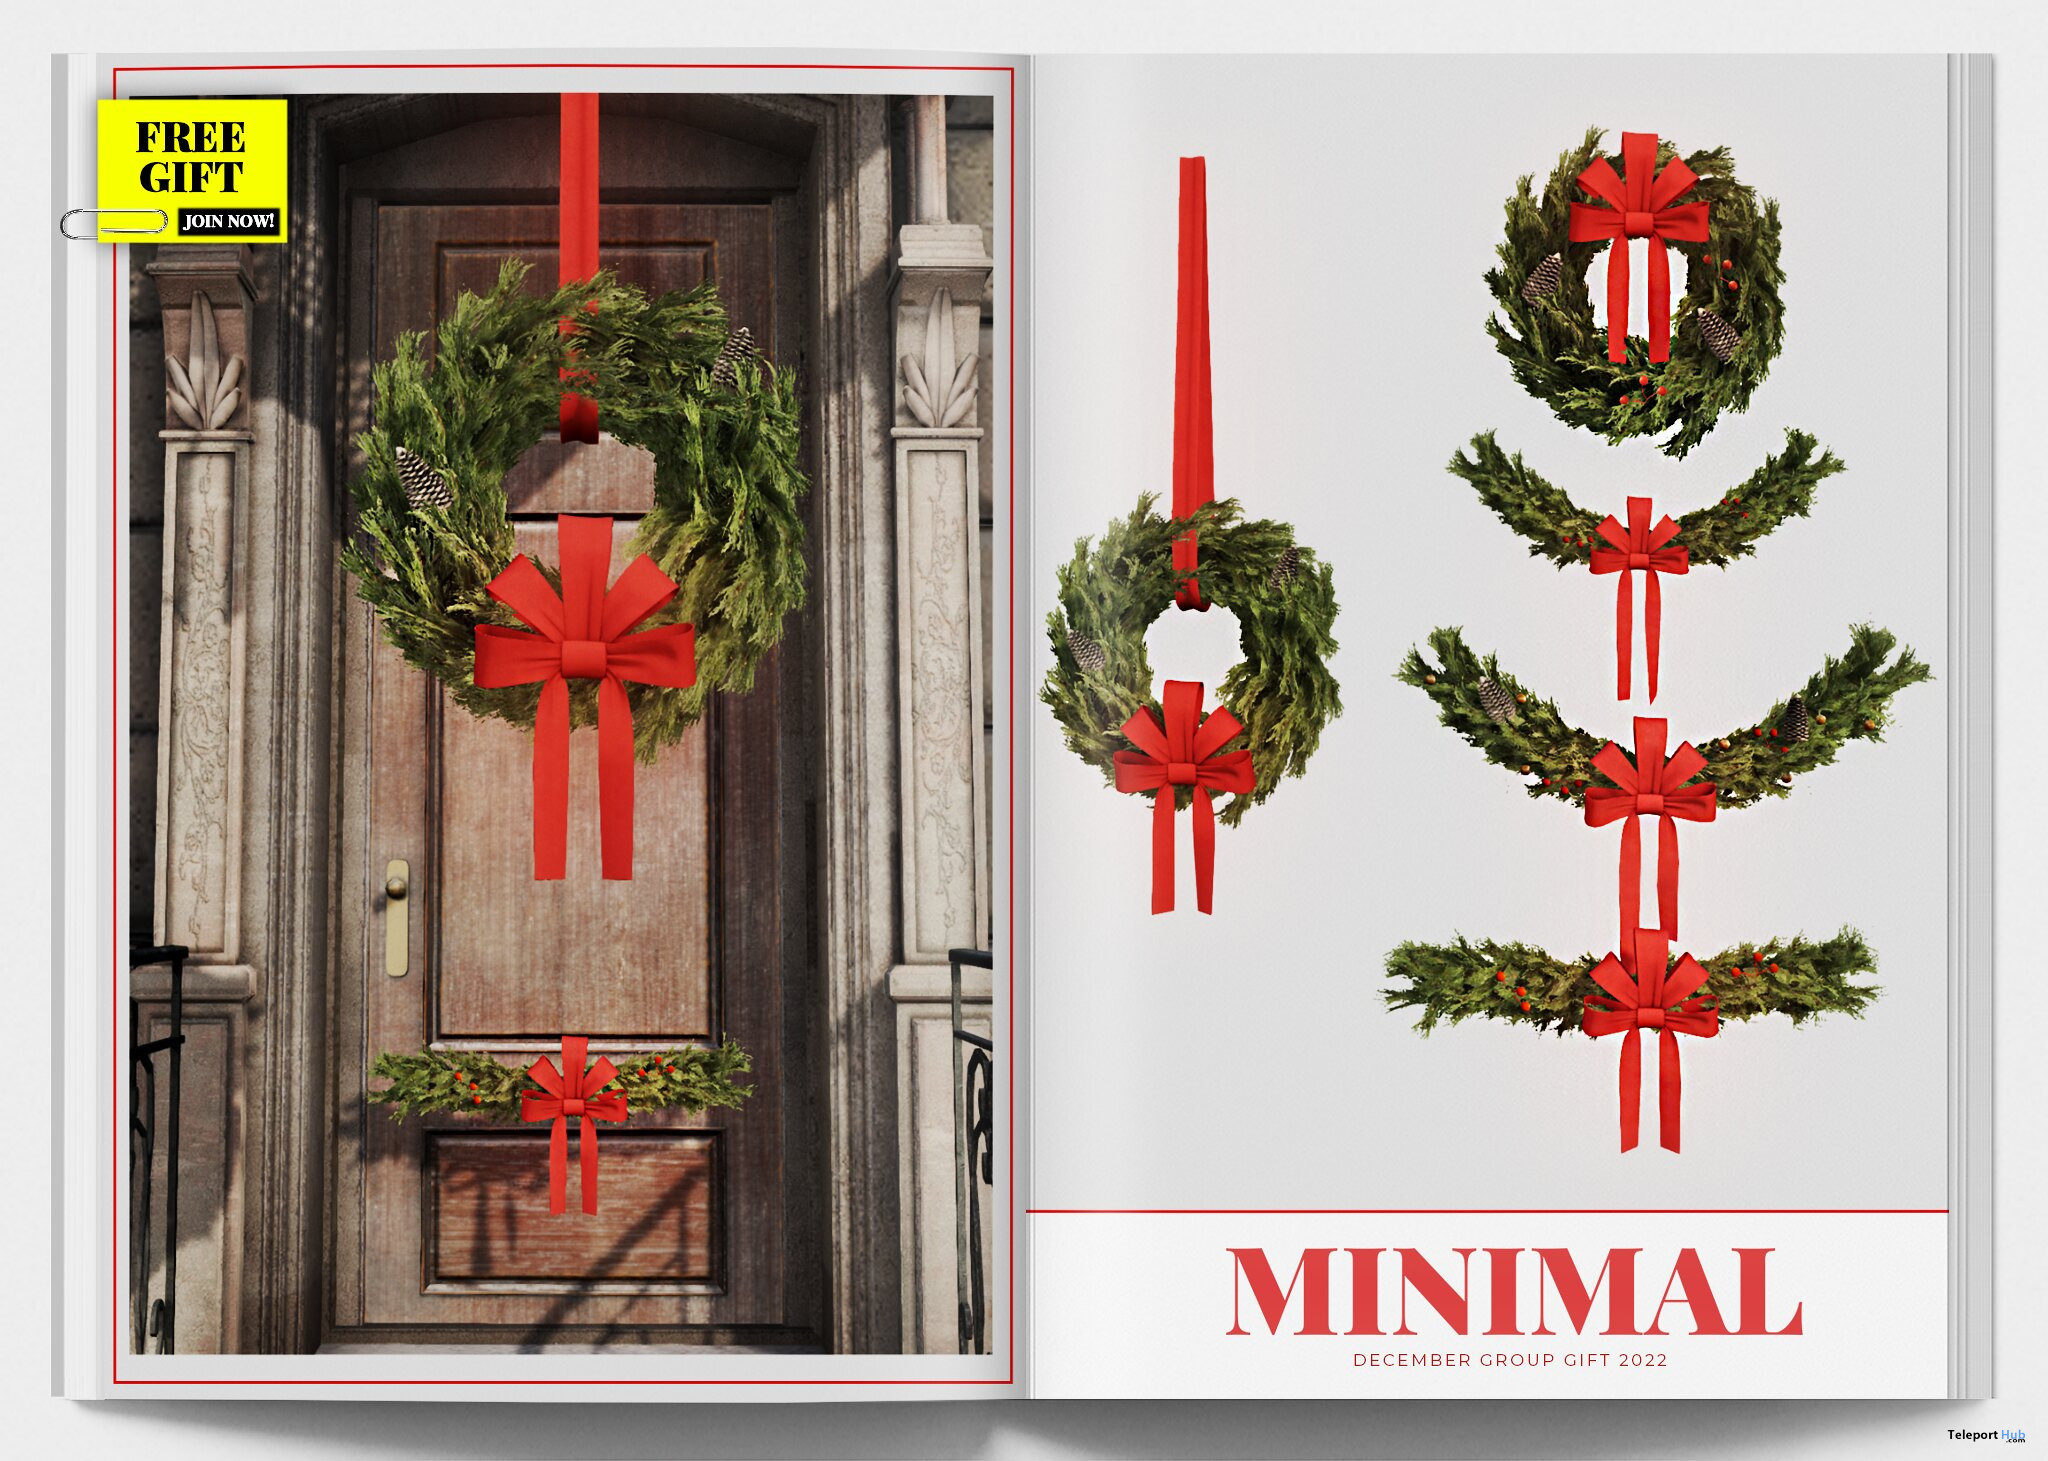 Christmas Wreath December 2022 Group Gift by MINIMAL - Teleport Hub - teleporthub.com